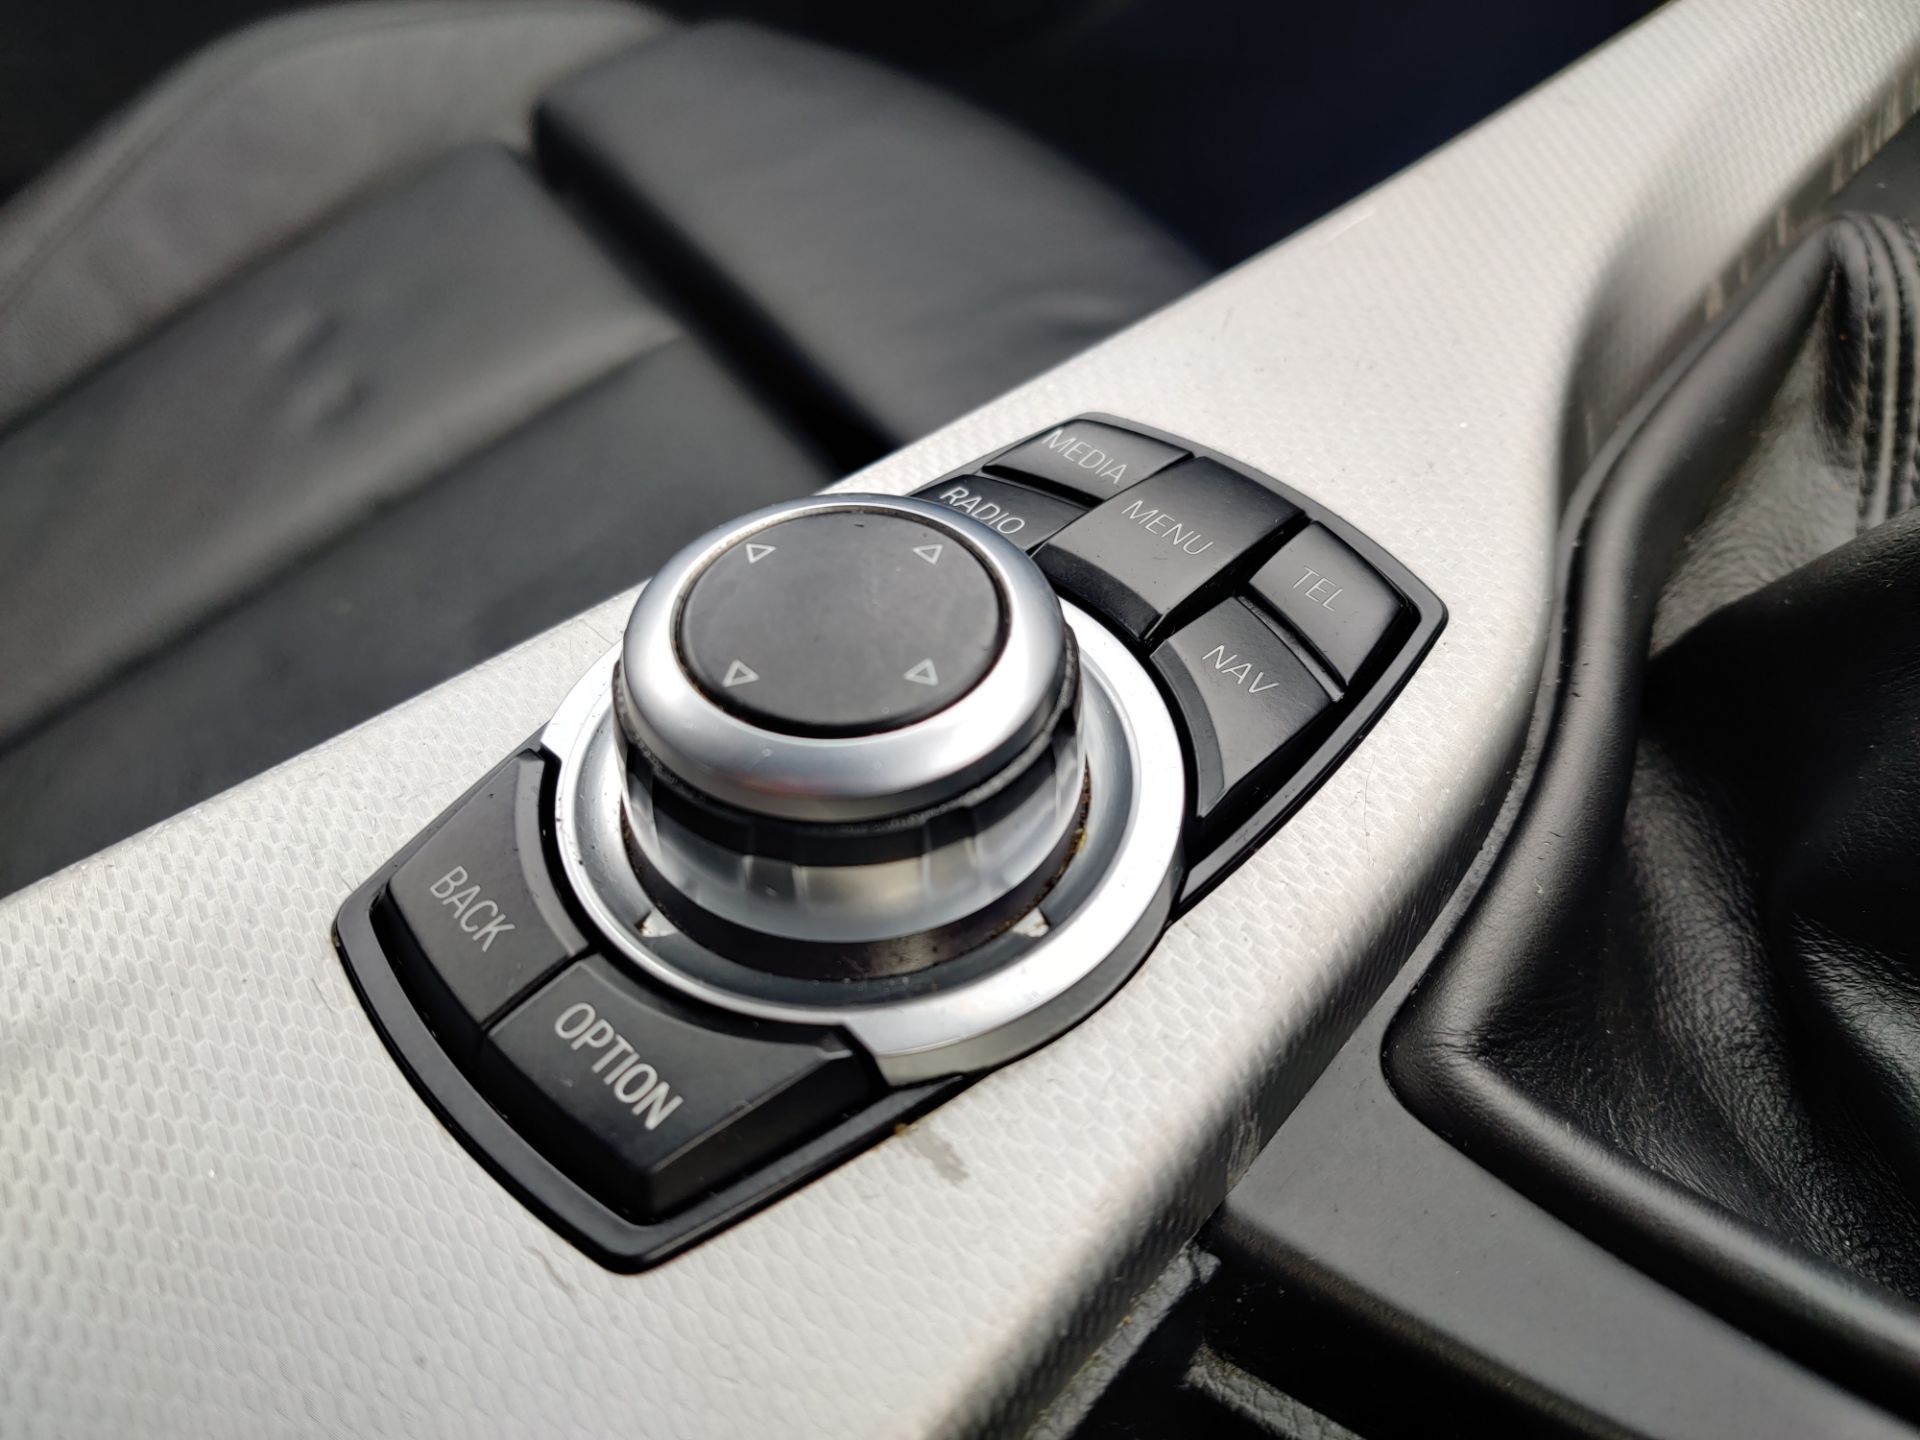 2015/65 REG BMW 318D M SPORT 2.0 DIESEL WHITE 4 DOOR SALOON, SHOWING 0 FORMER KEEPERS *NO VAT* - Image 21 of 23